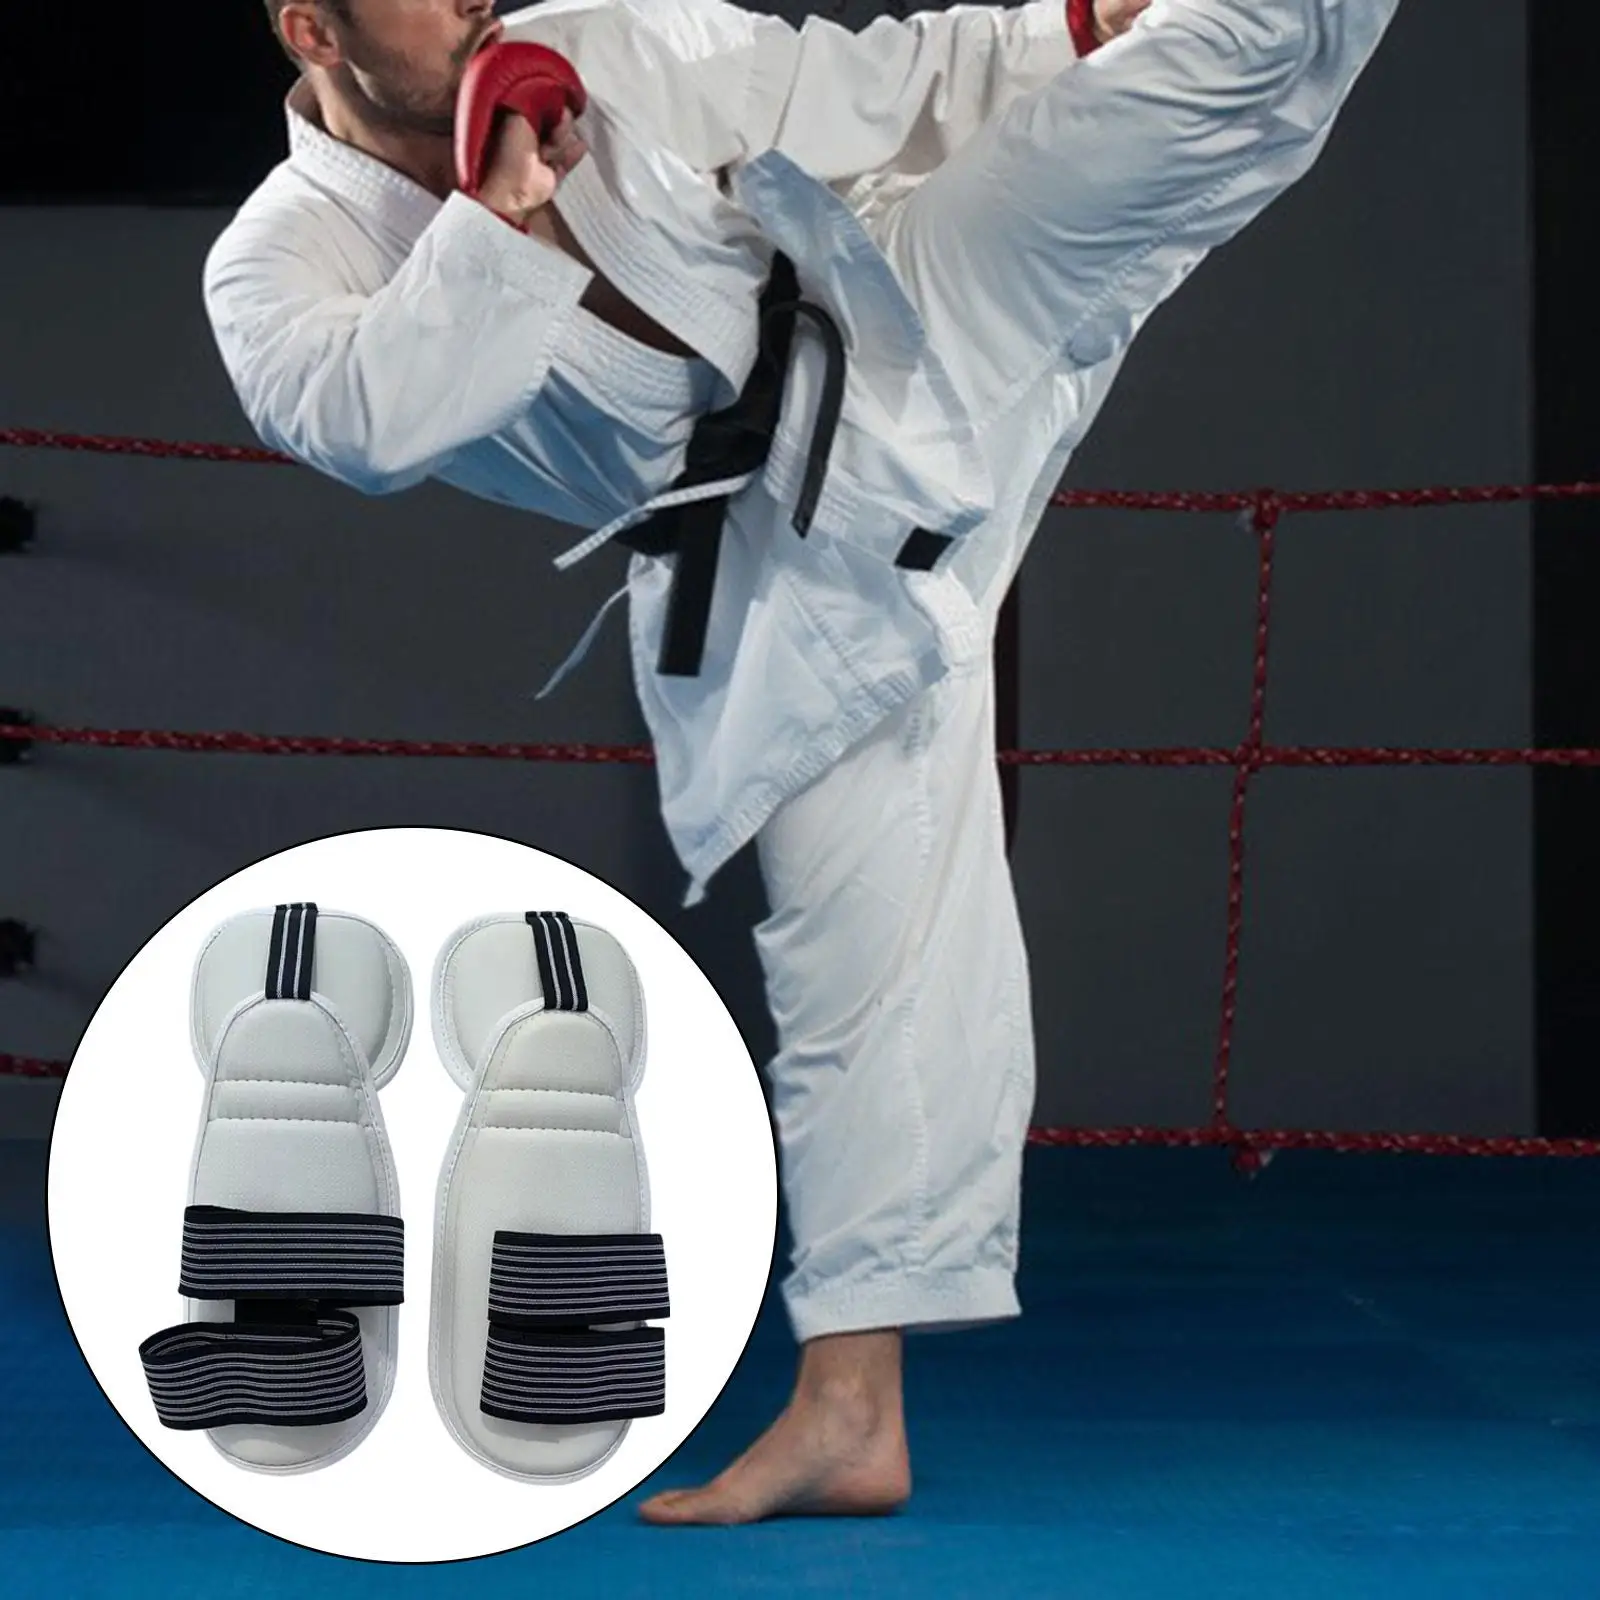 Taekwondo Forearm Guards Padded Arm Sleeves Taekwondo Forearm Protectors for Kids Adults Boxing Match Karate Kickboxing